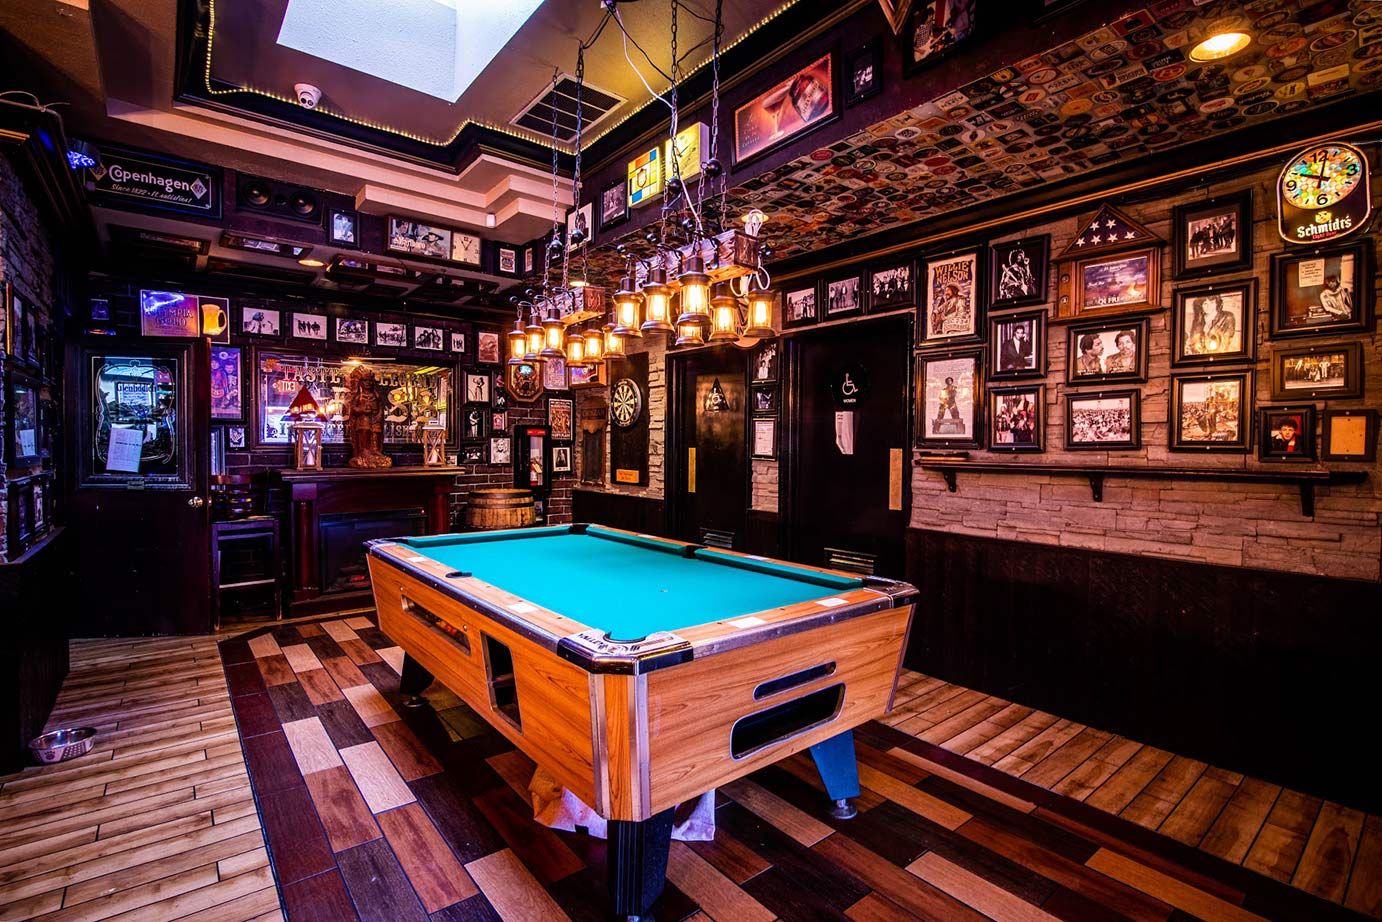 Restaurant interior with billiard table